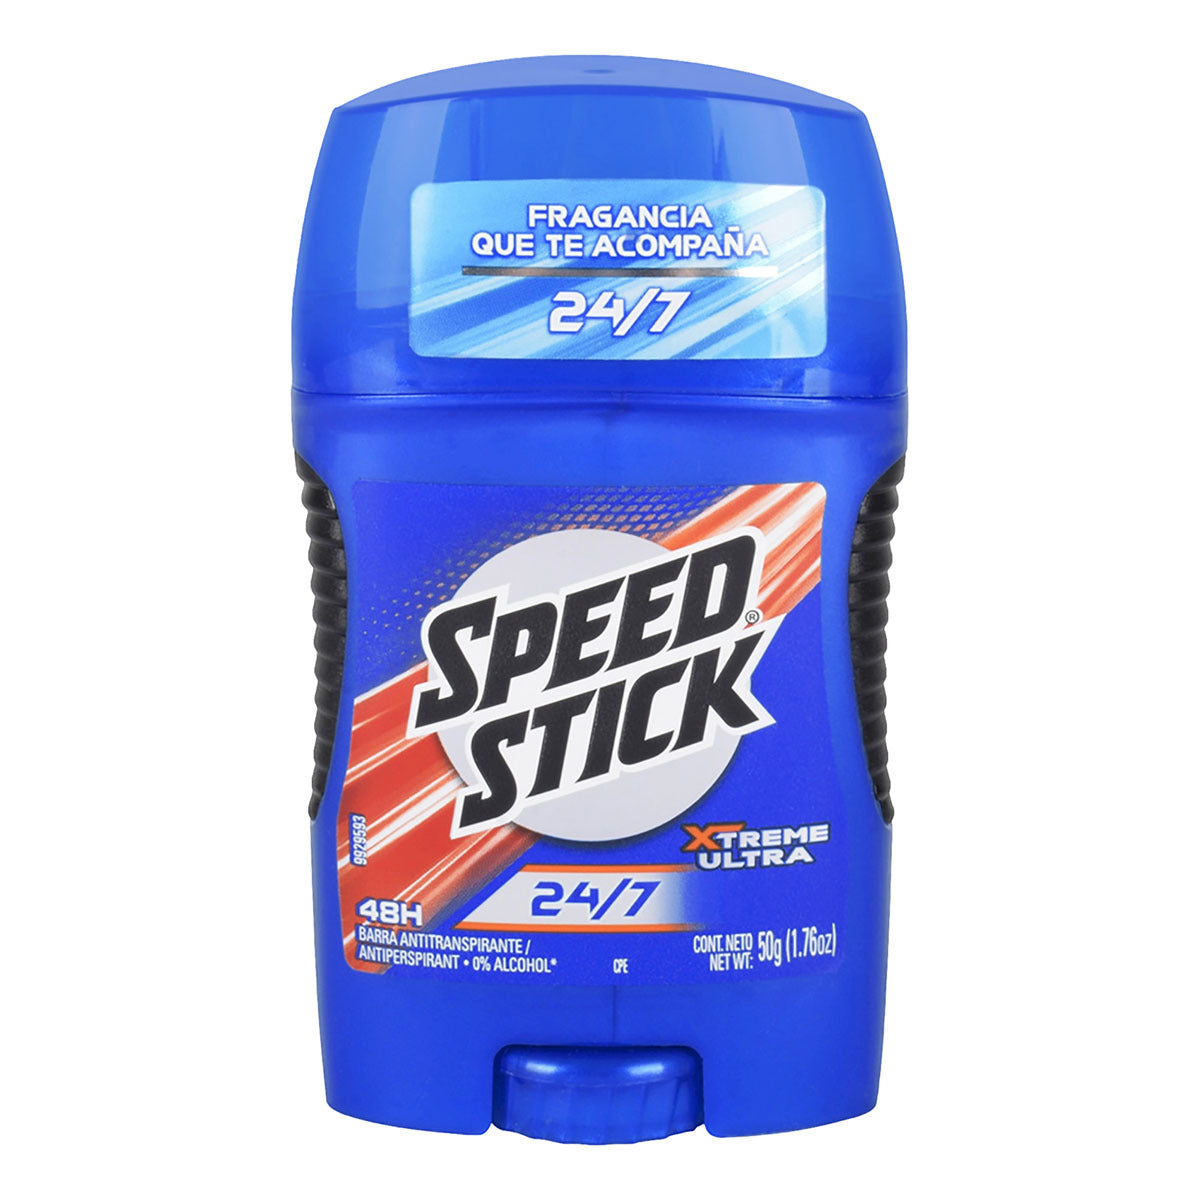 Antitranspirante Speed Stick 24/7 Xtreme Ultra en Barra 50 g